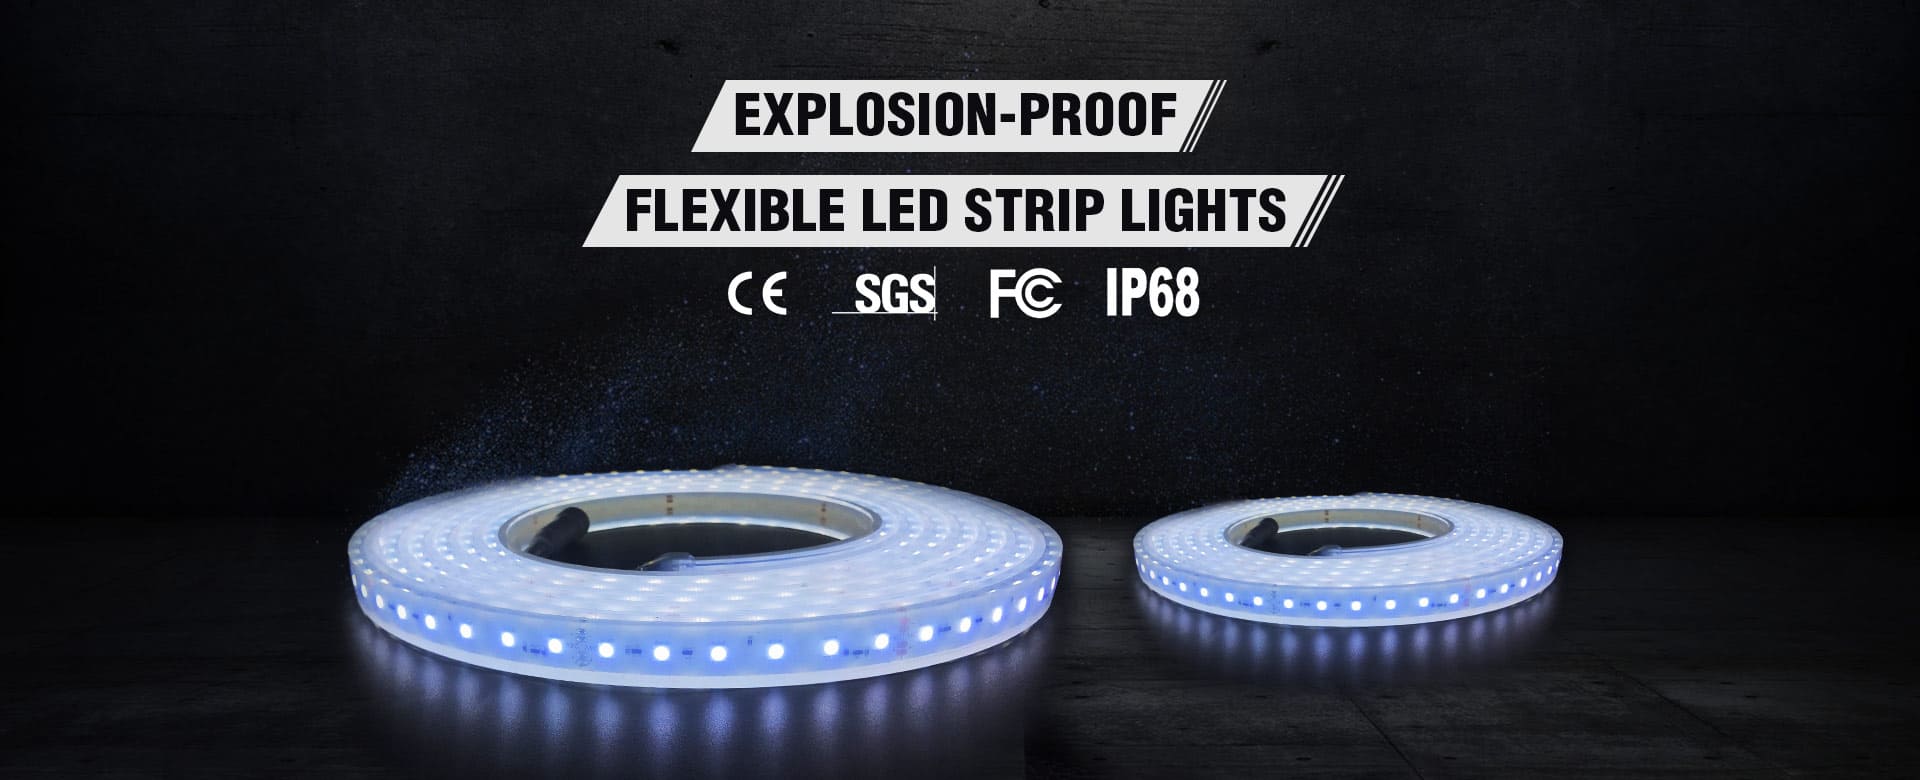 Explosion-proof Flexible LED Strip Lights